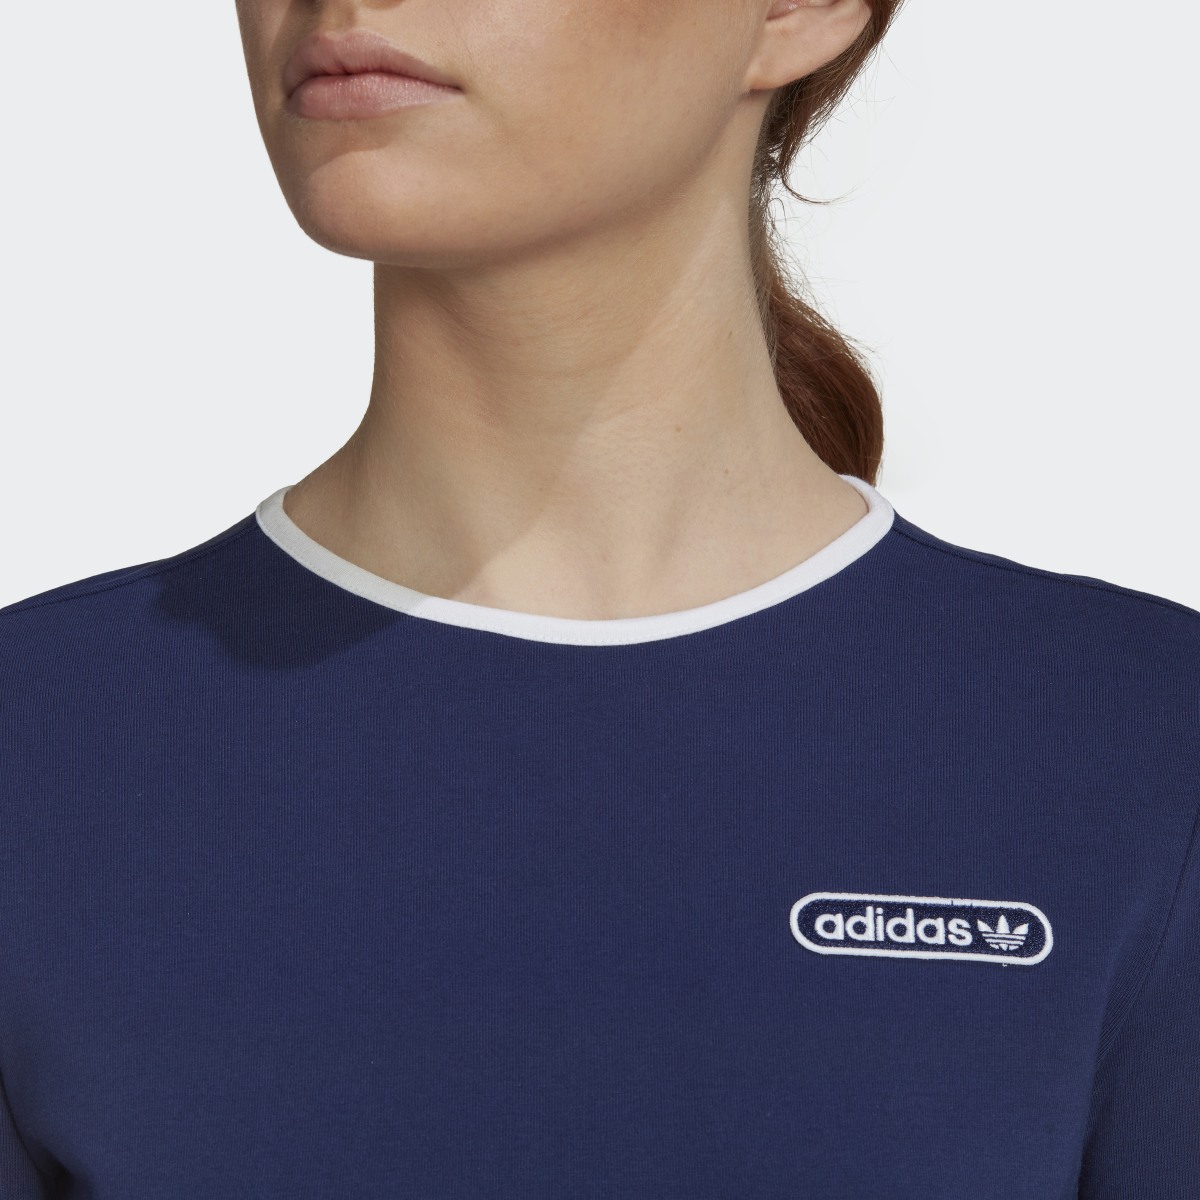 Adidas T-shirt Crop with Binding Details. 7